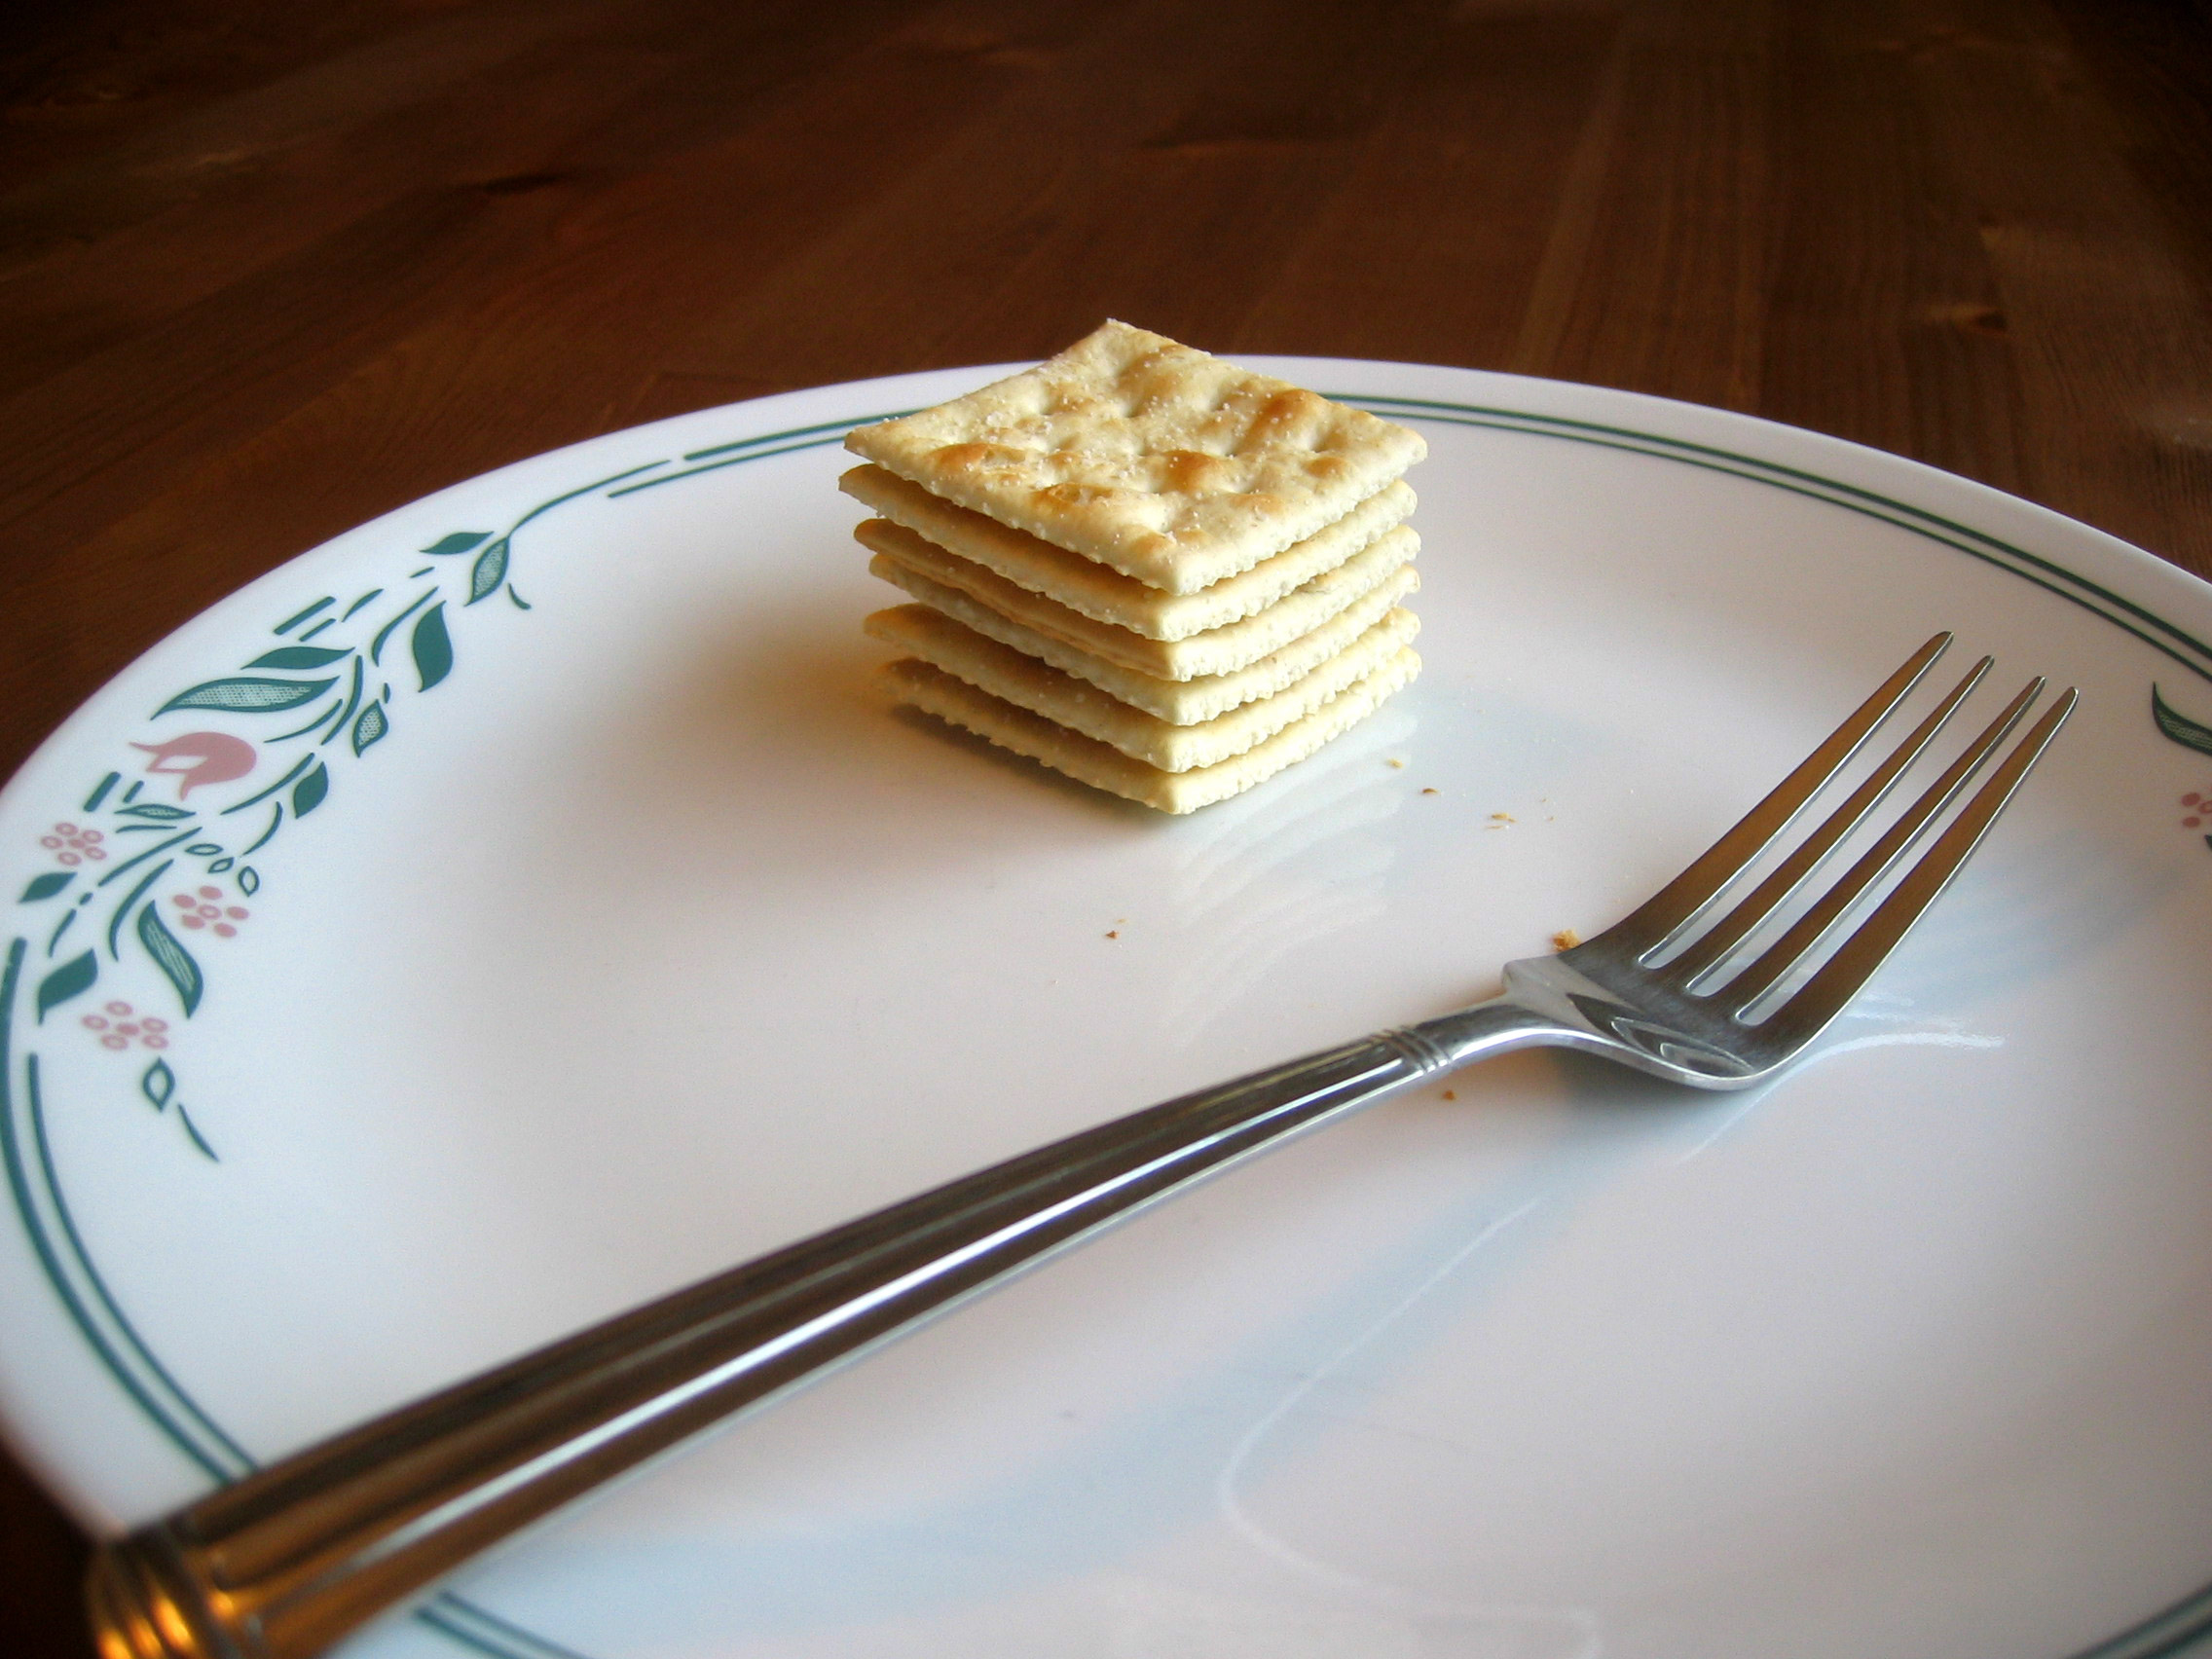 Saltine cracker challenge - Wikipedia